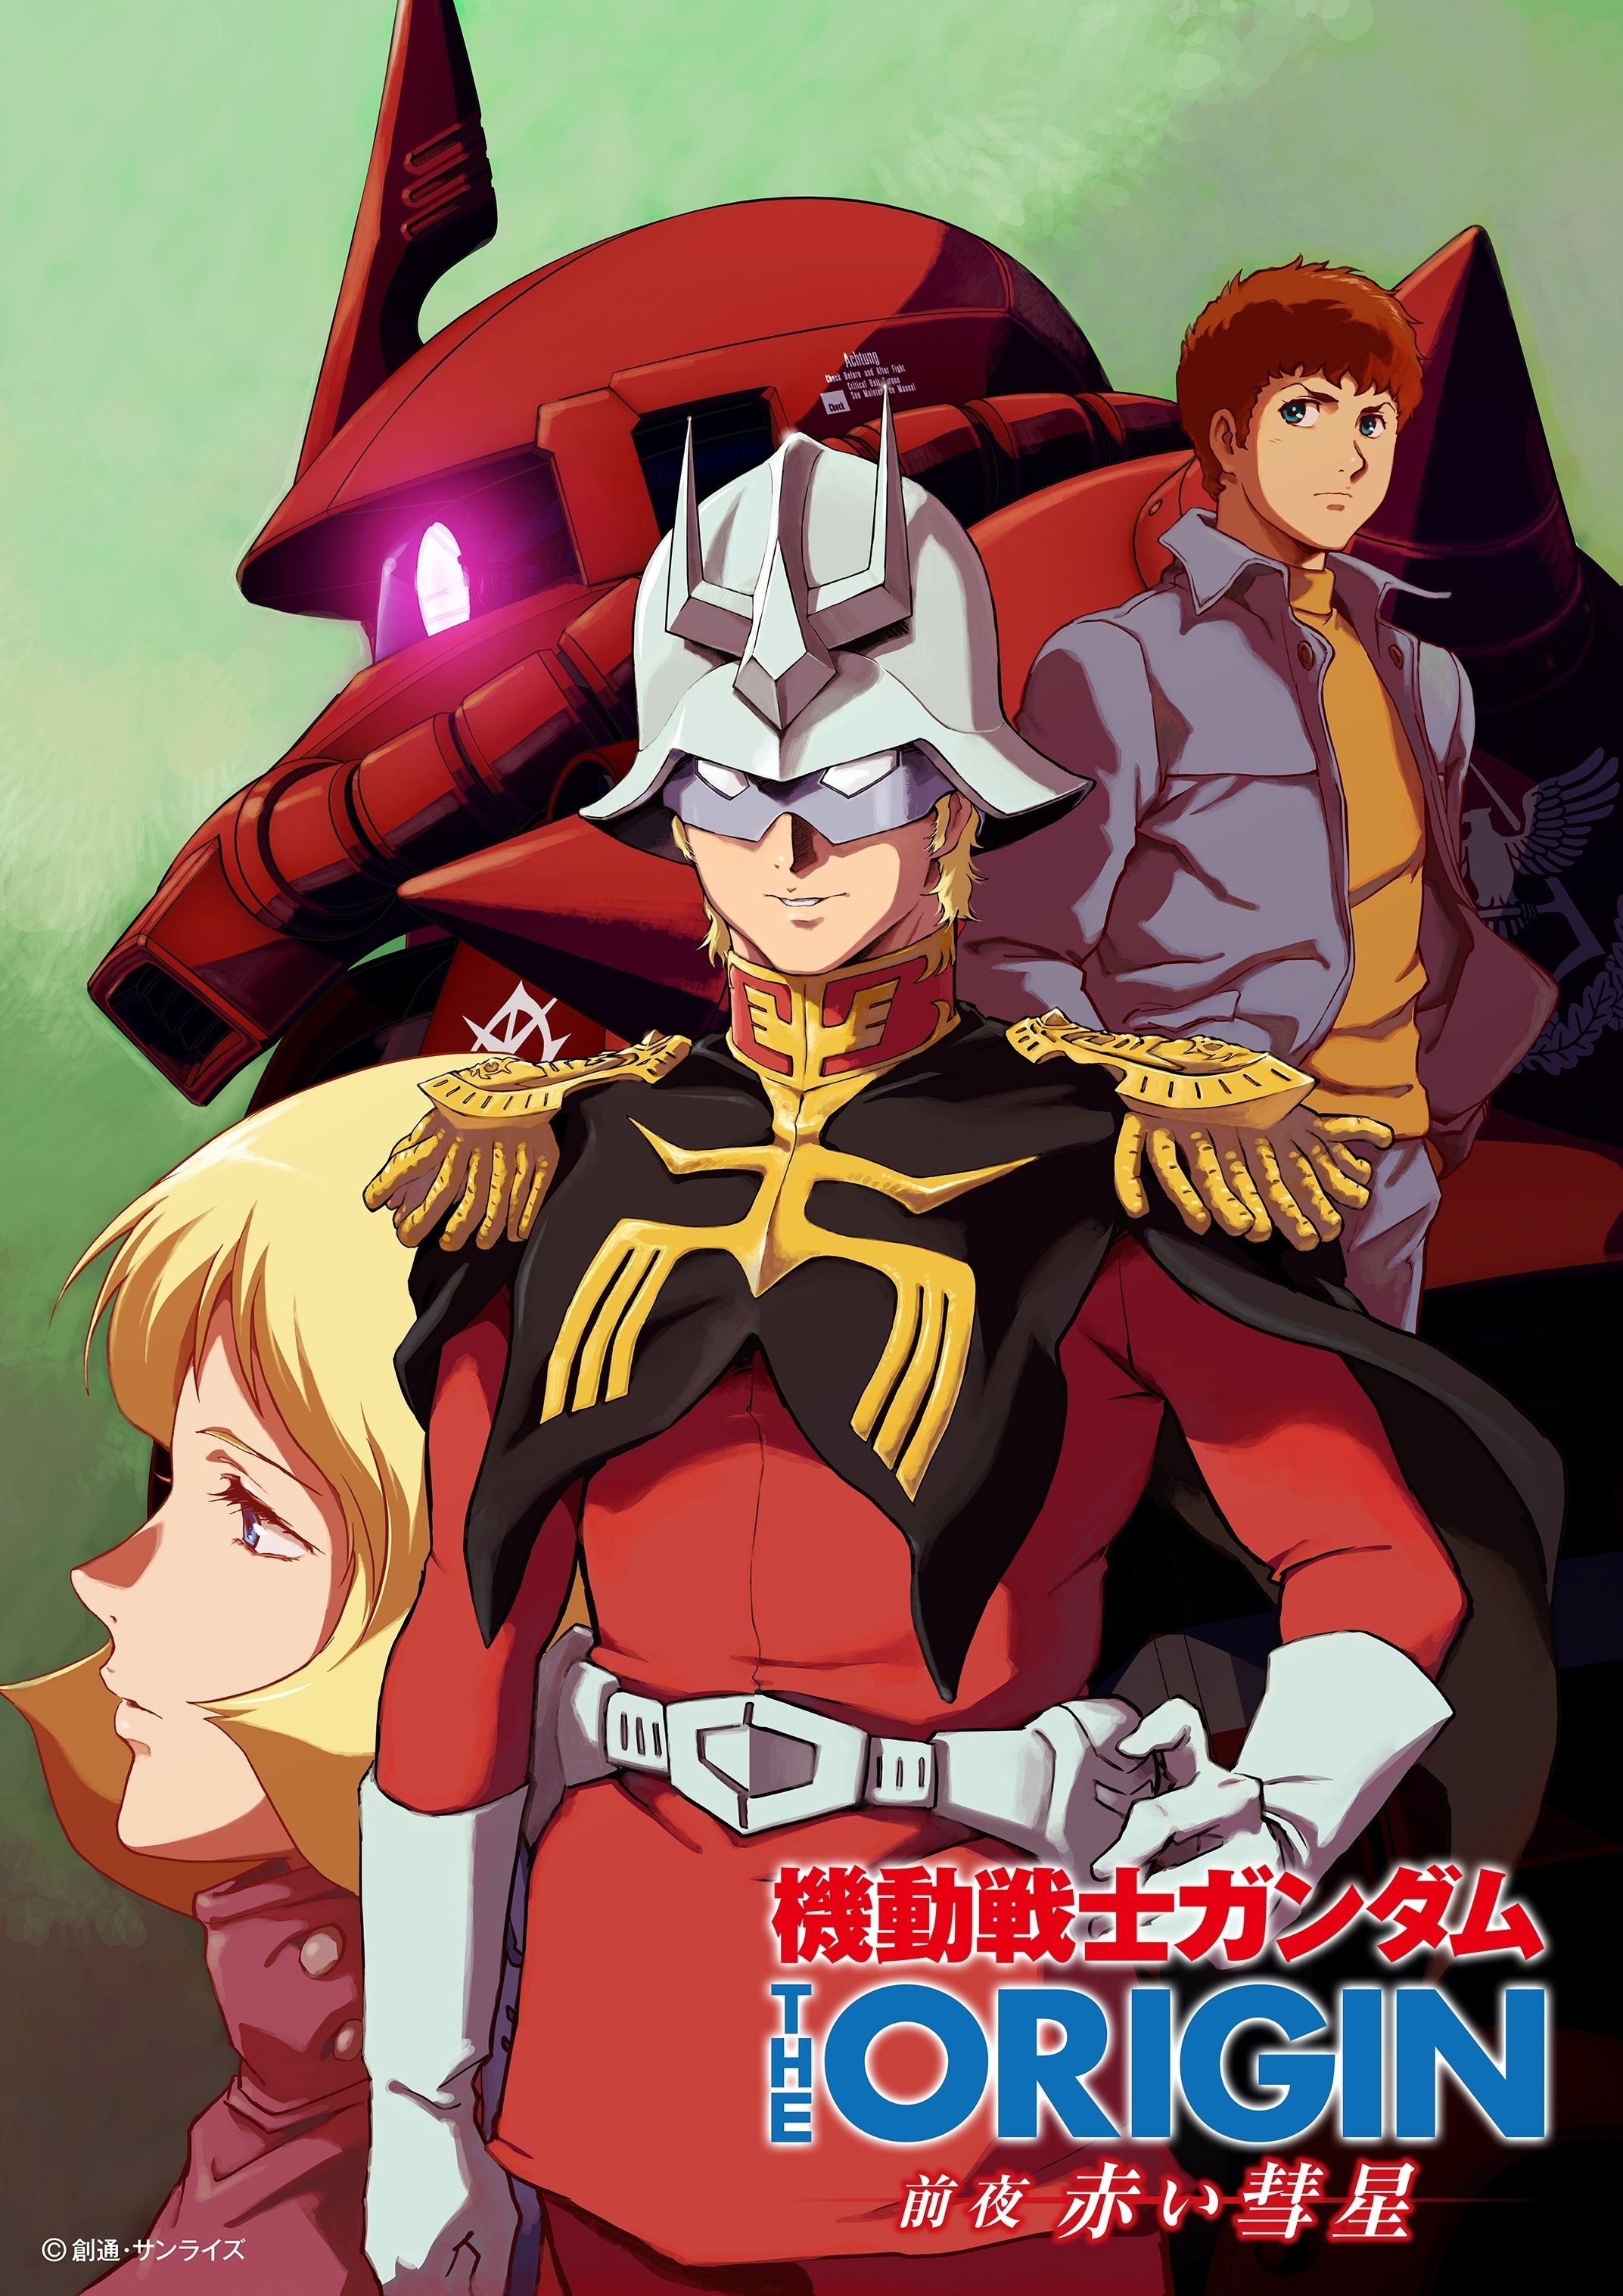 Mobile Suit Gundam: The Origin - Advent of the Red Comet ne zaman